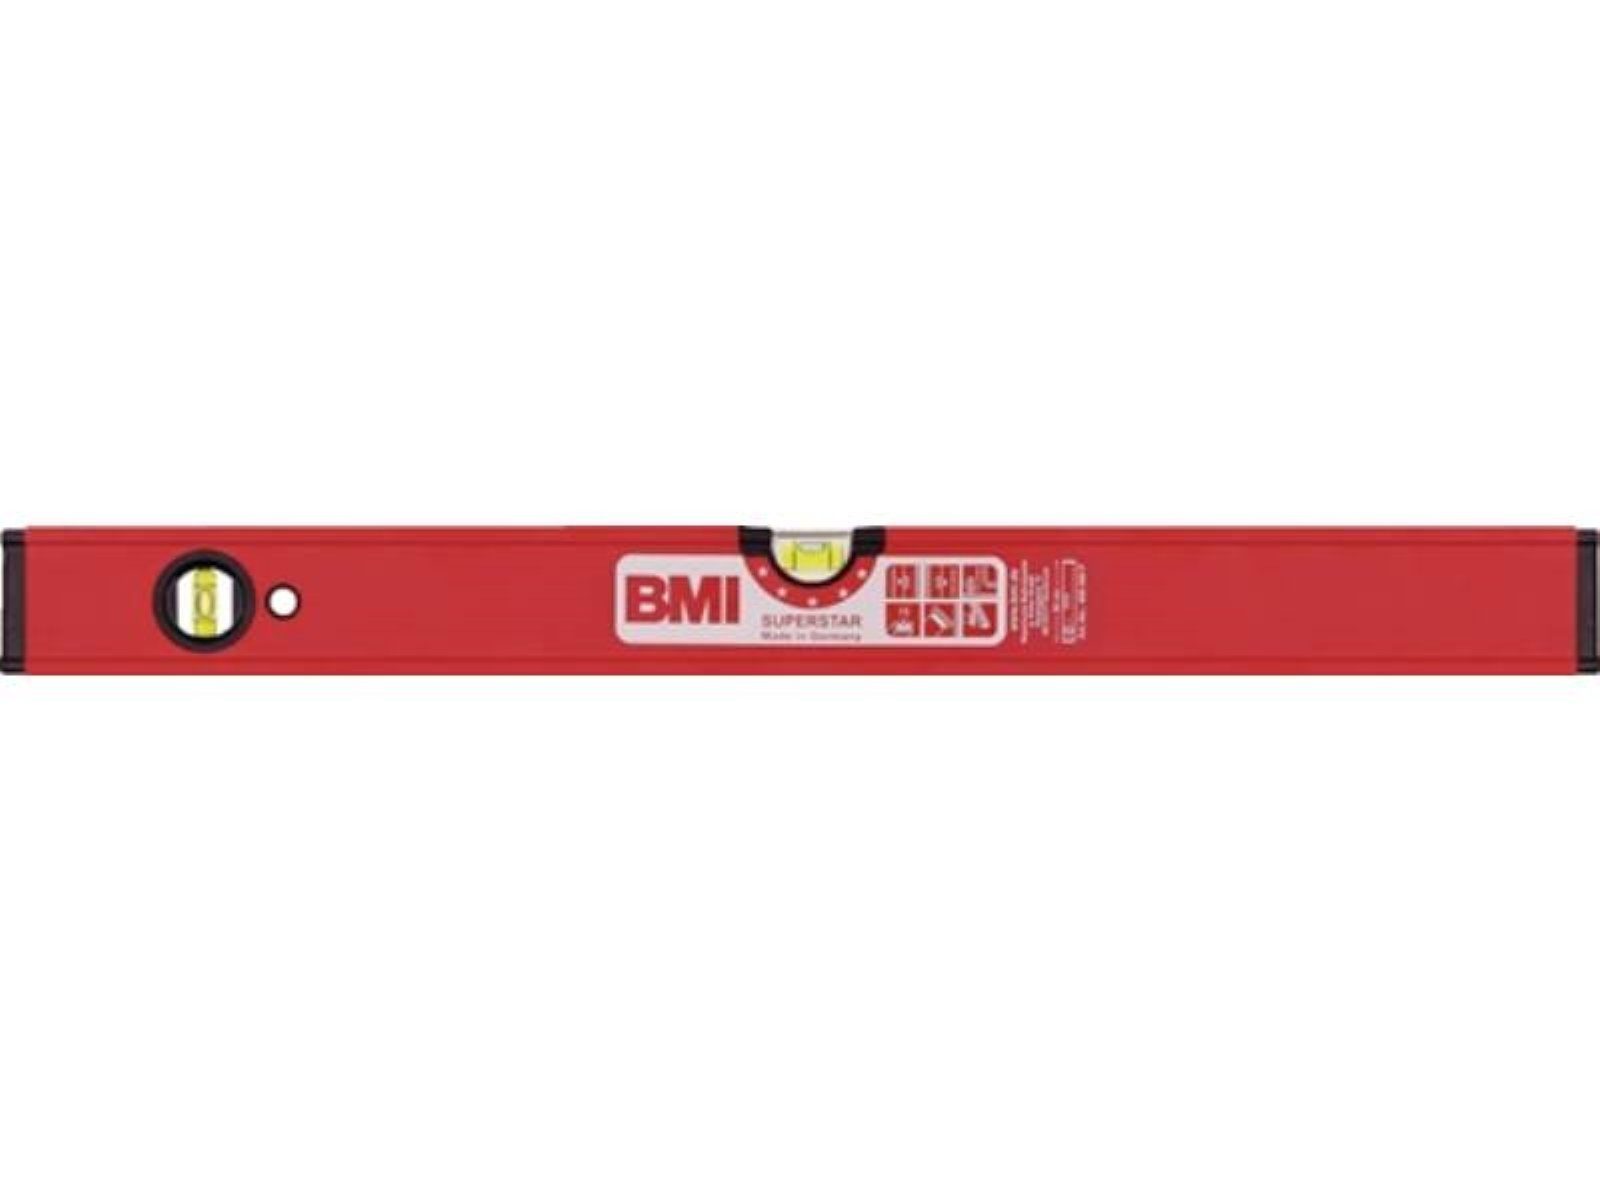 Alu.rot Magnet Wasserwaage BMI mm/m Alumi m.Magnet SUPERSTAR BMI ± 120cm 0,5 aus